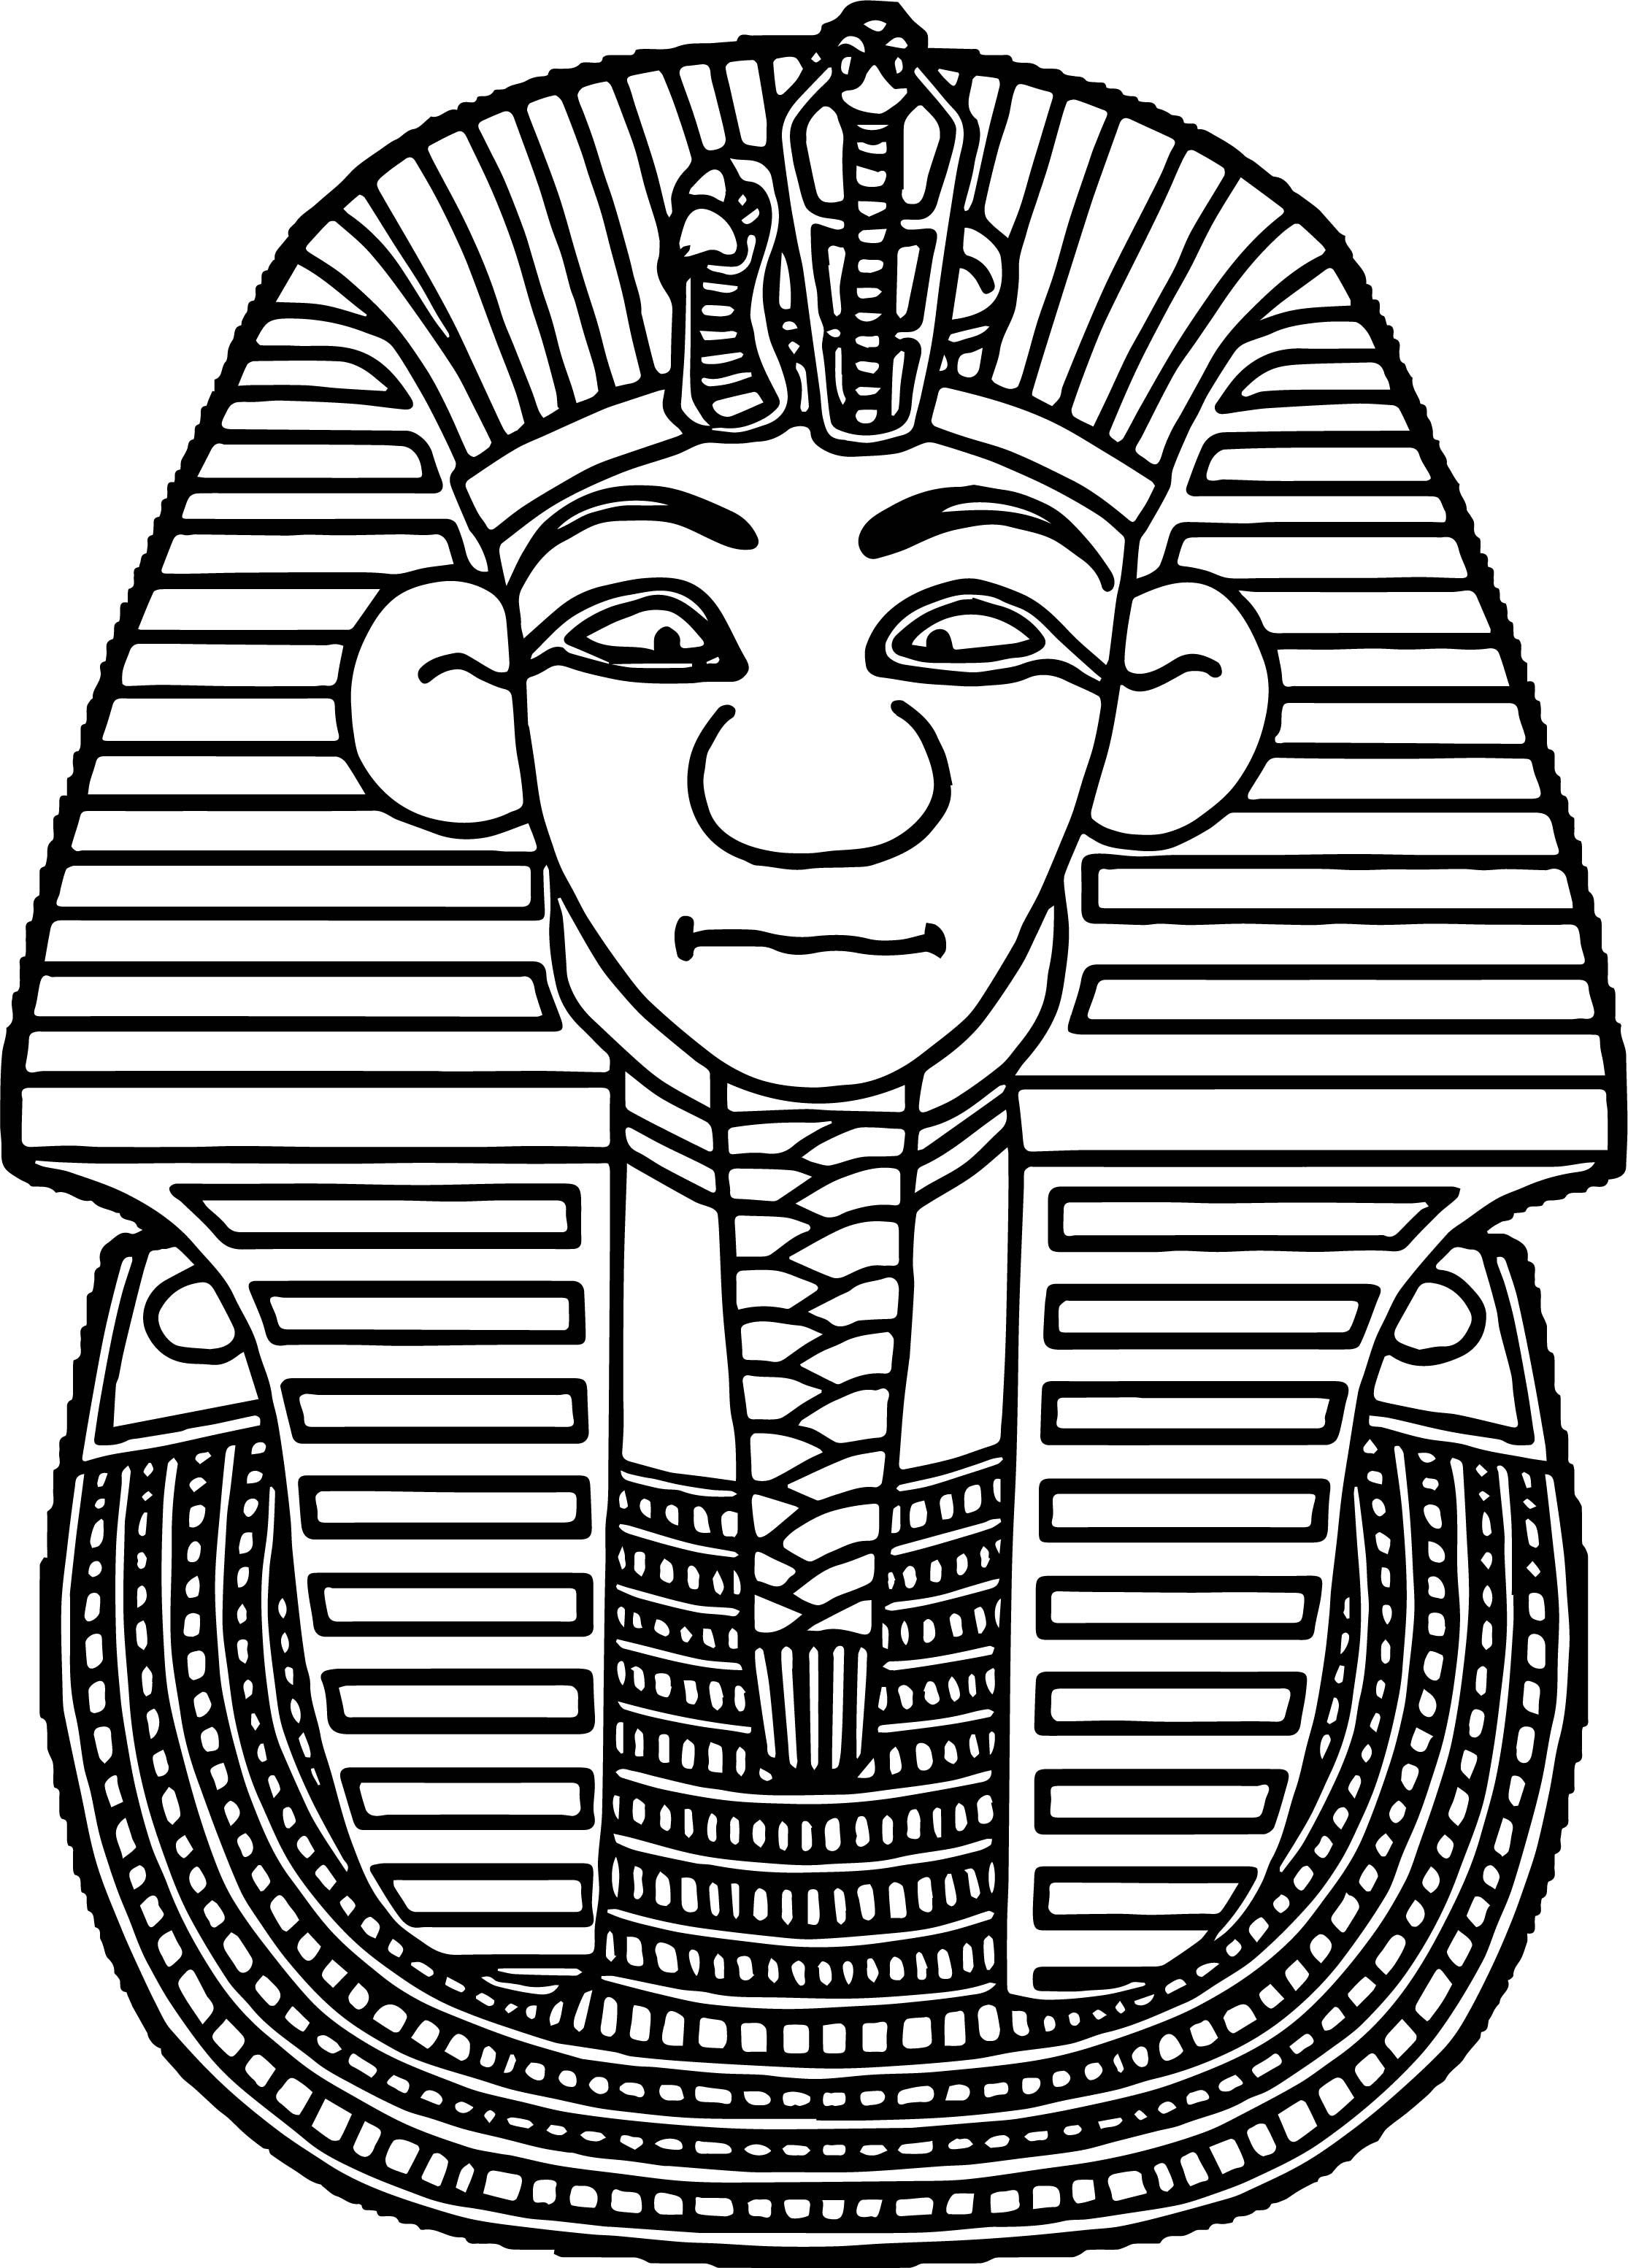 Маска фараона рисунок 5. Маска фараона Тутанхамона рисунок. Маска Тутанхамона рисунок. Маска фараона Тутанхамона изо 5. Древний Египет маска фараона.